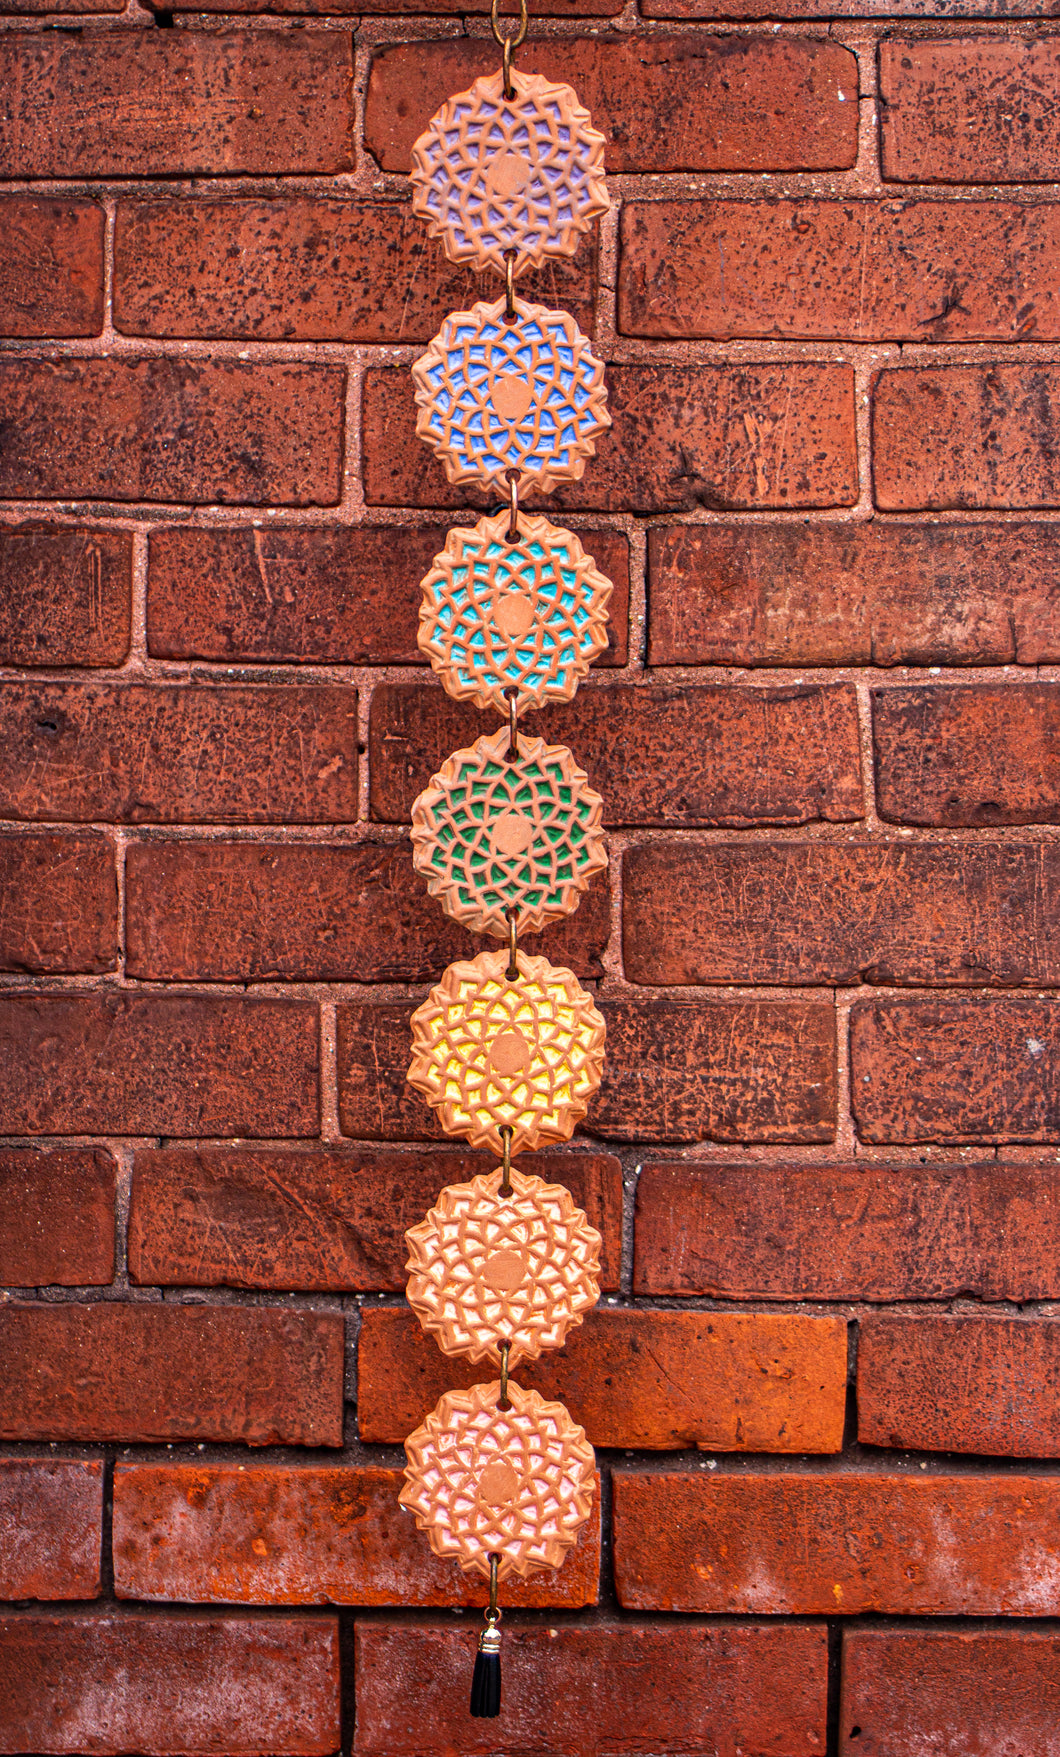 Terra cotta Chakra Ceramic wall hanging